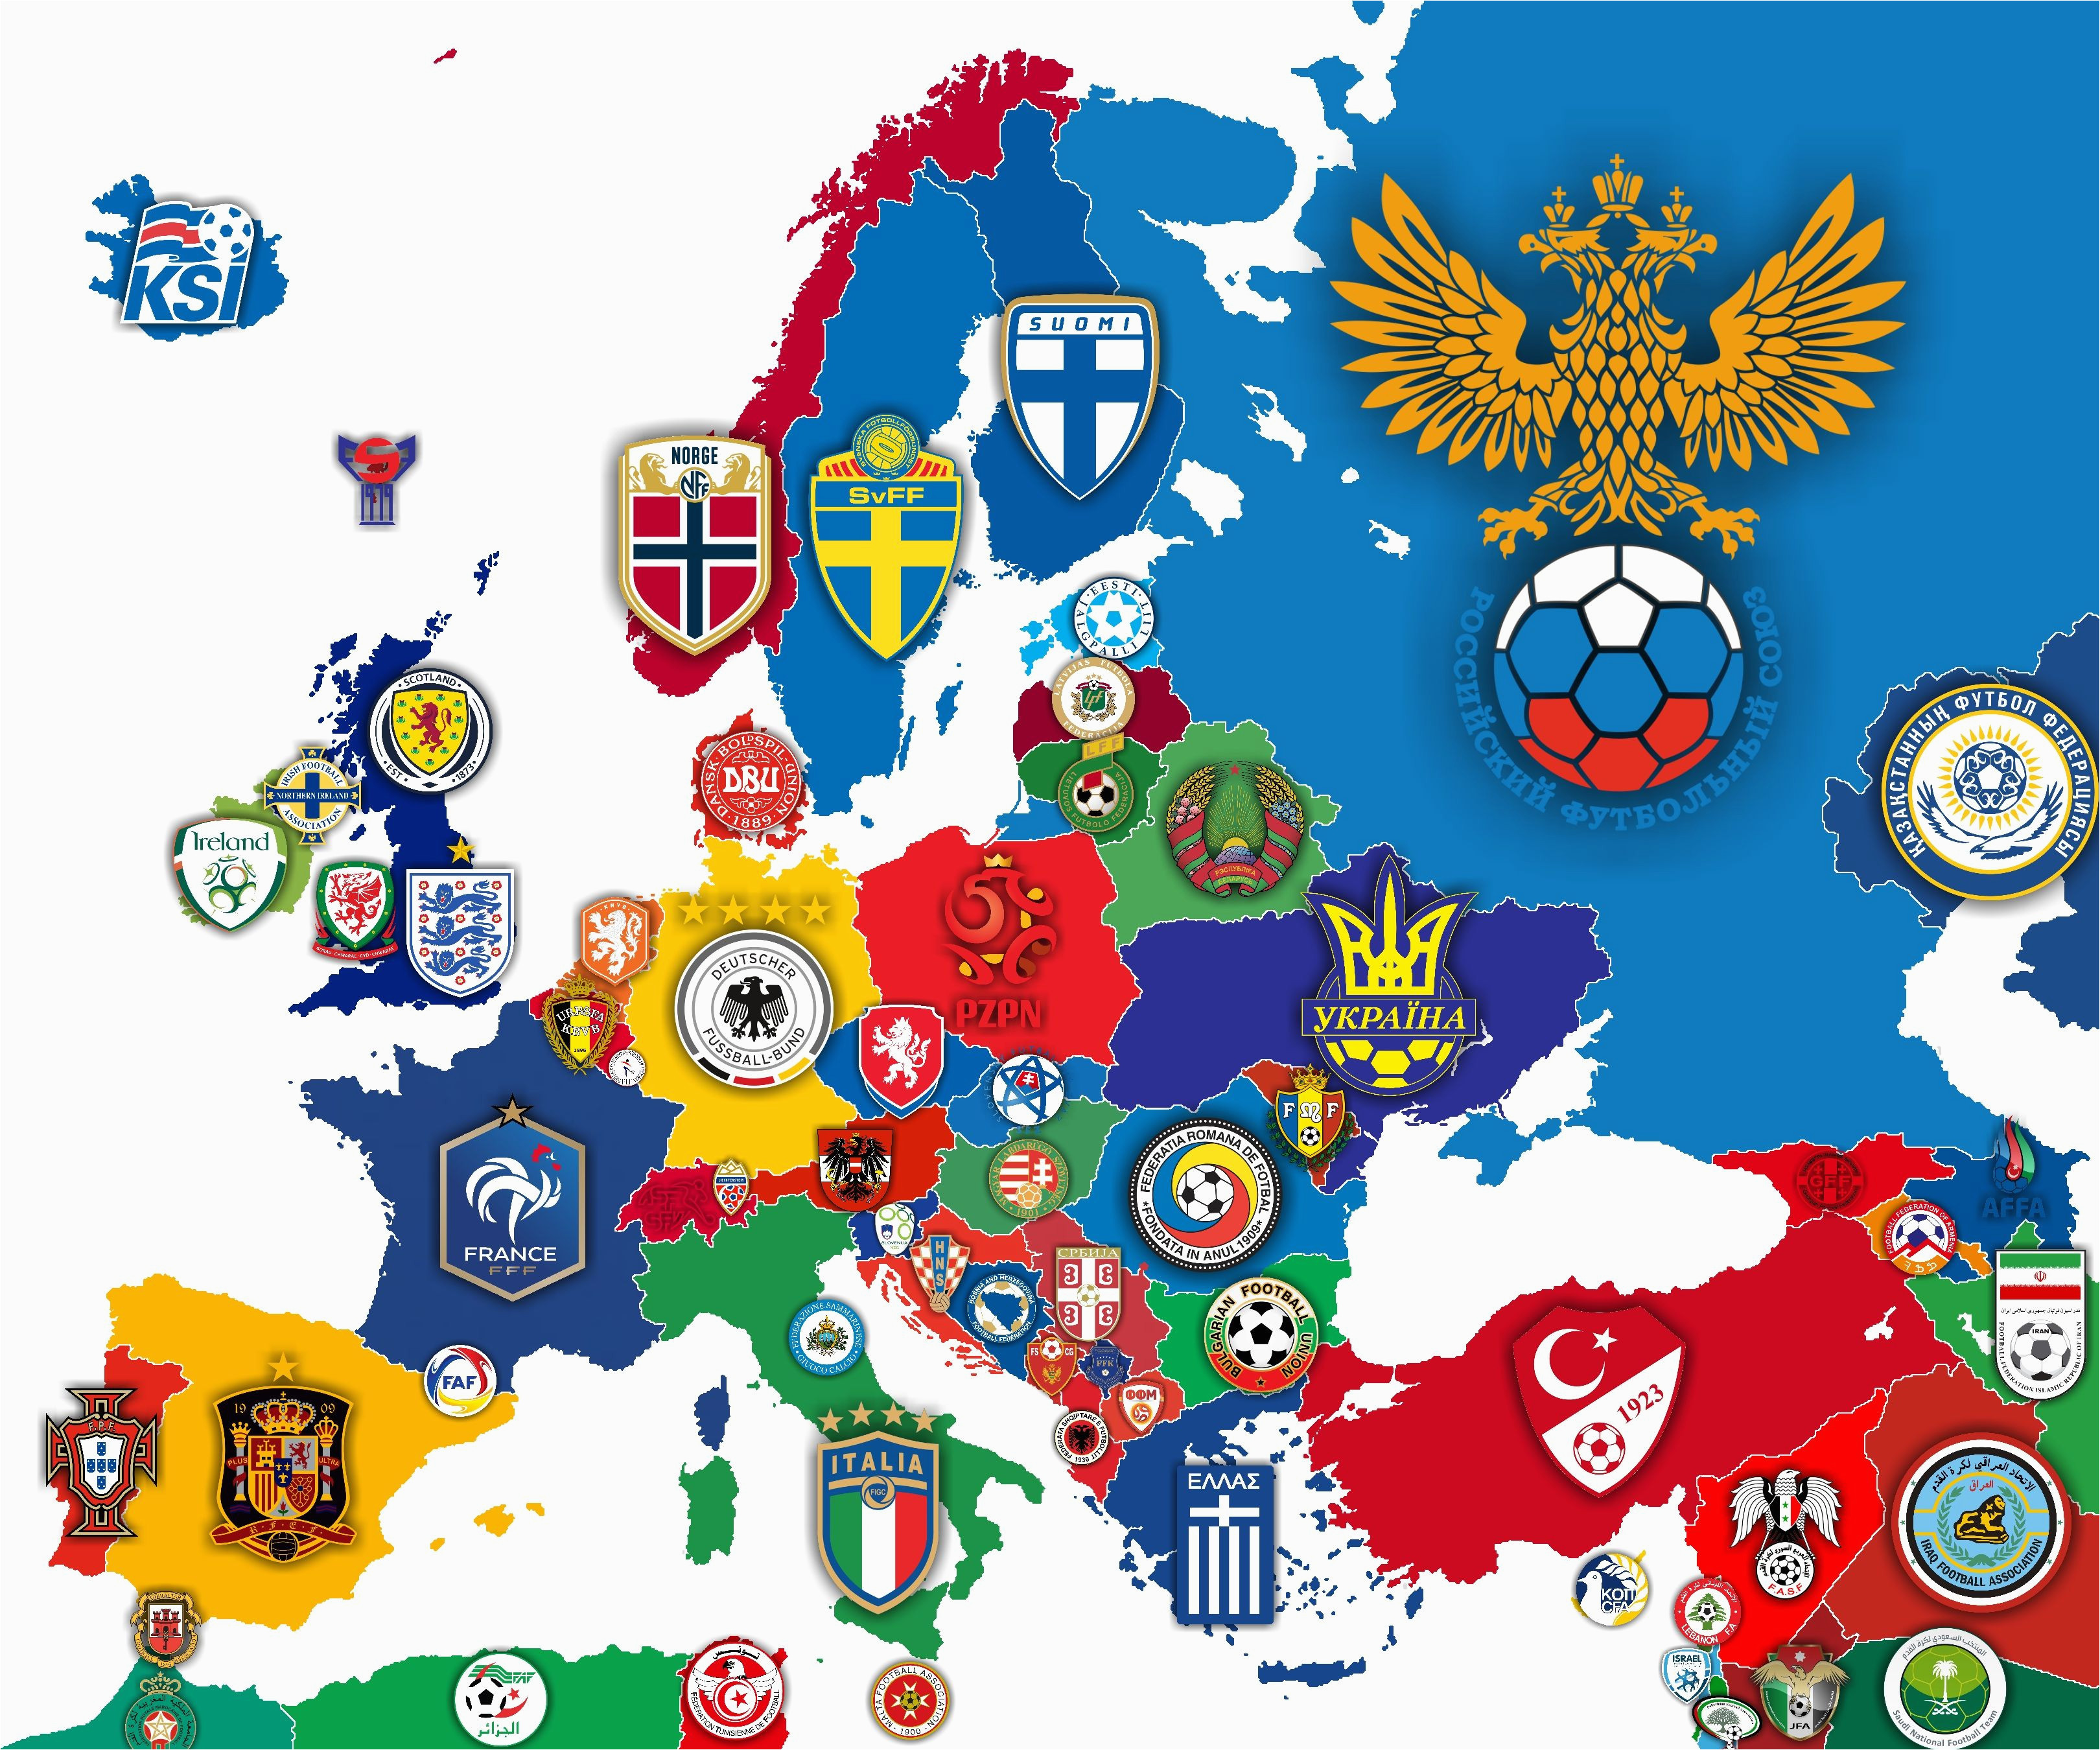 logos of national football teams in europe surrounding map